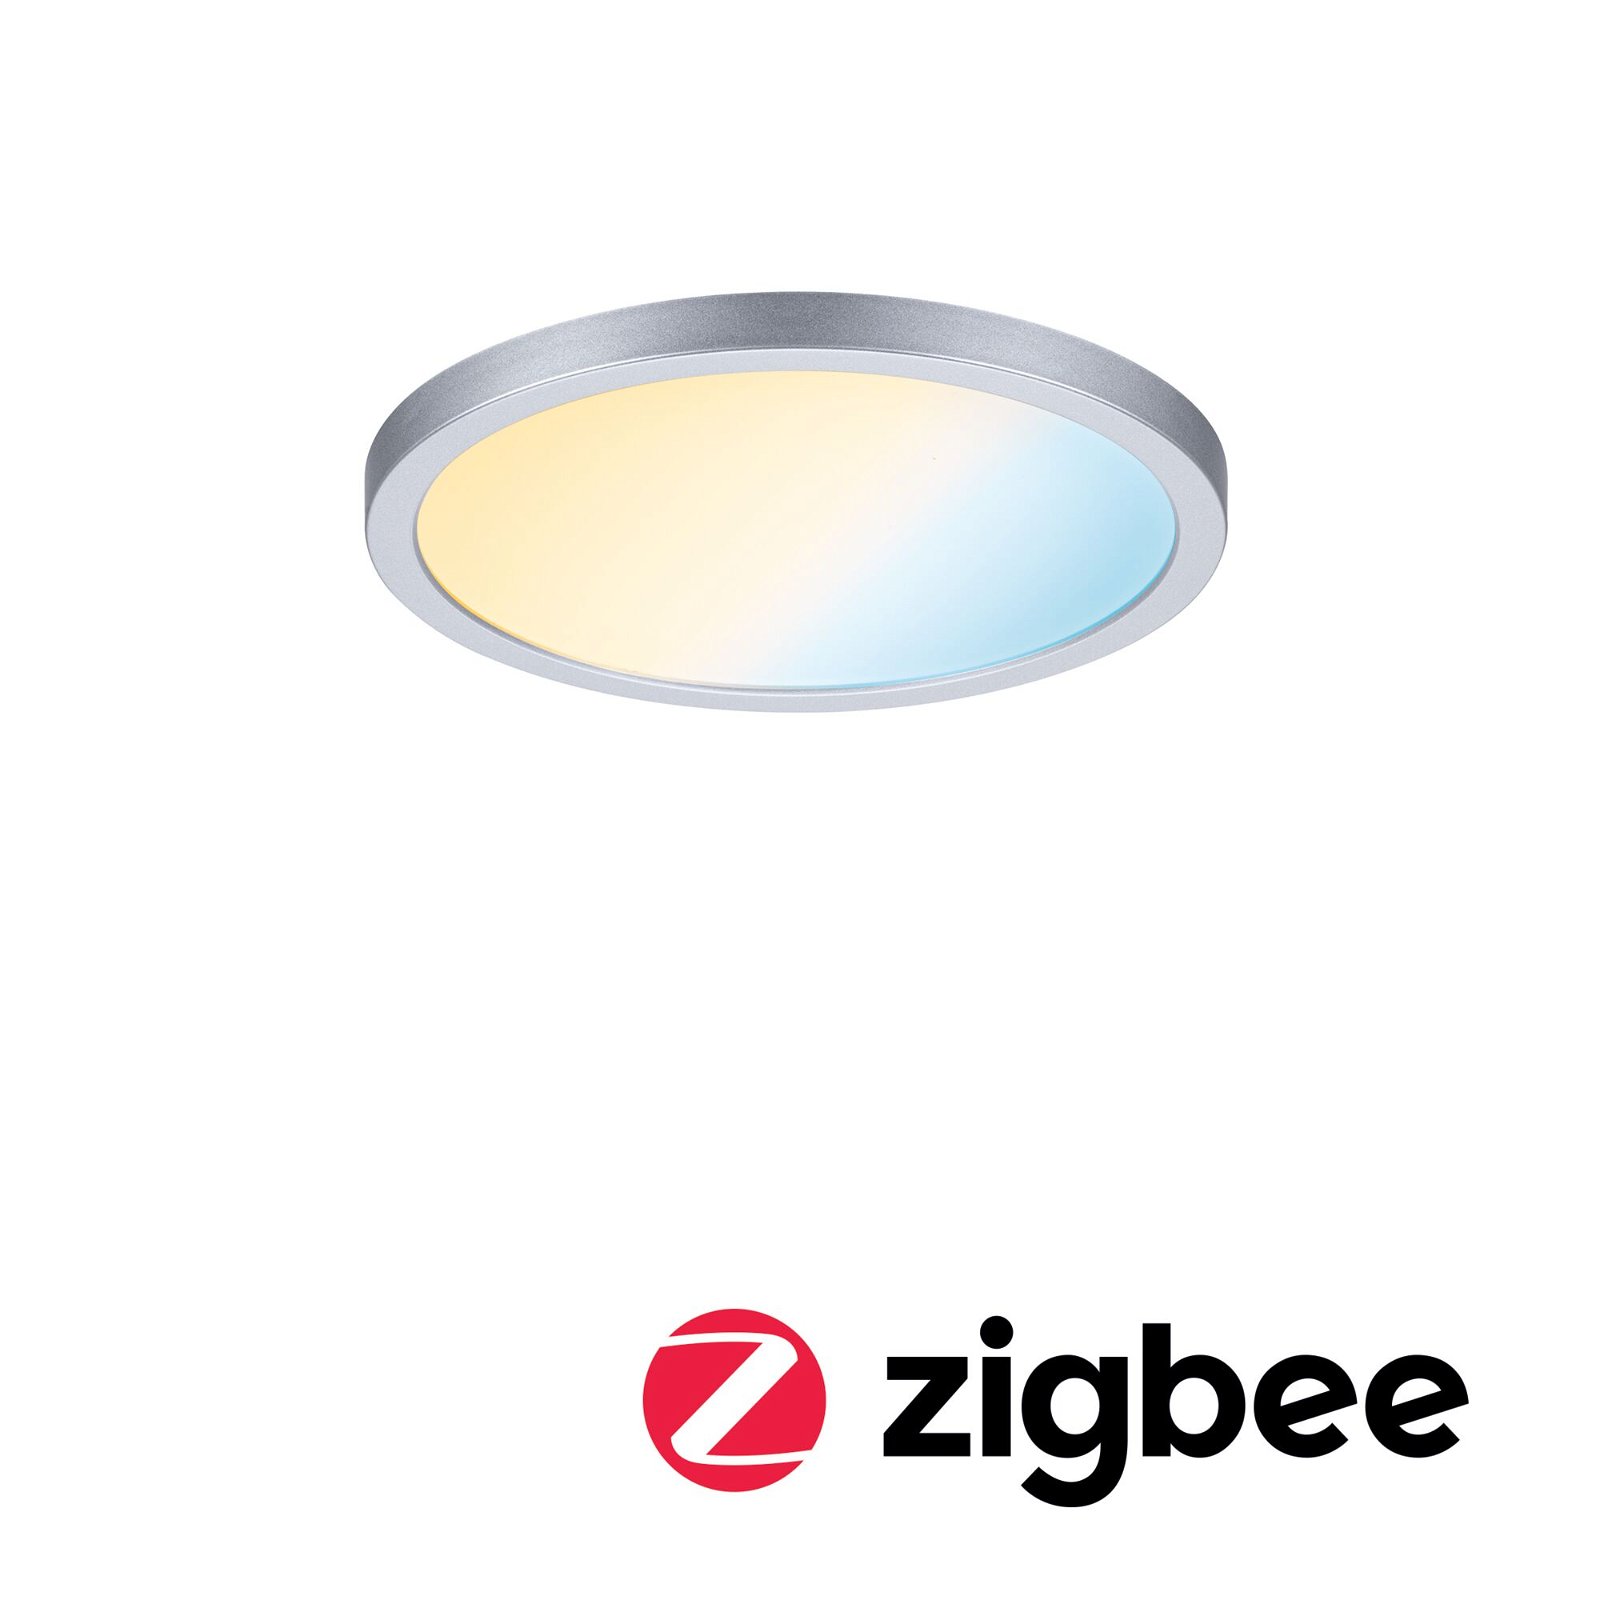 VariFit LED-inbouwpaneel Smart Home Zigbee 3.0 Areo IP44 rond 175mm 13W 1200lm Tunable White Chroom mat dimbaar